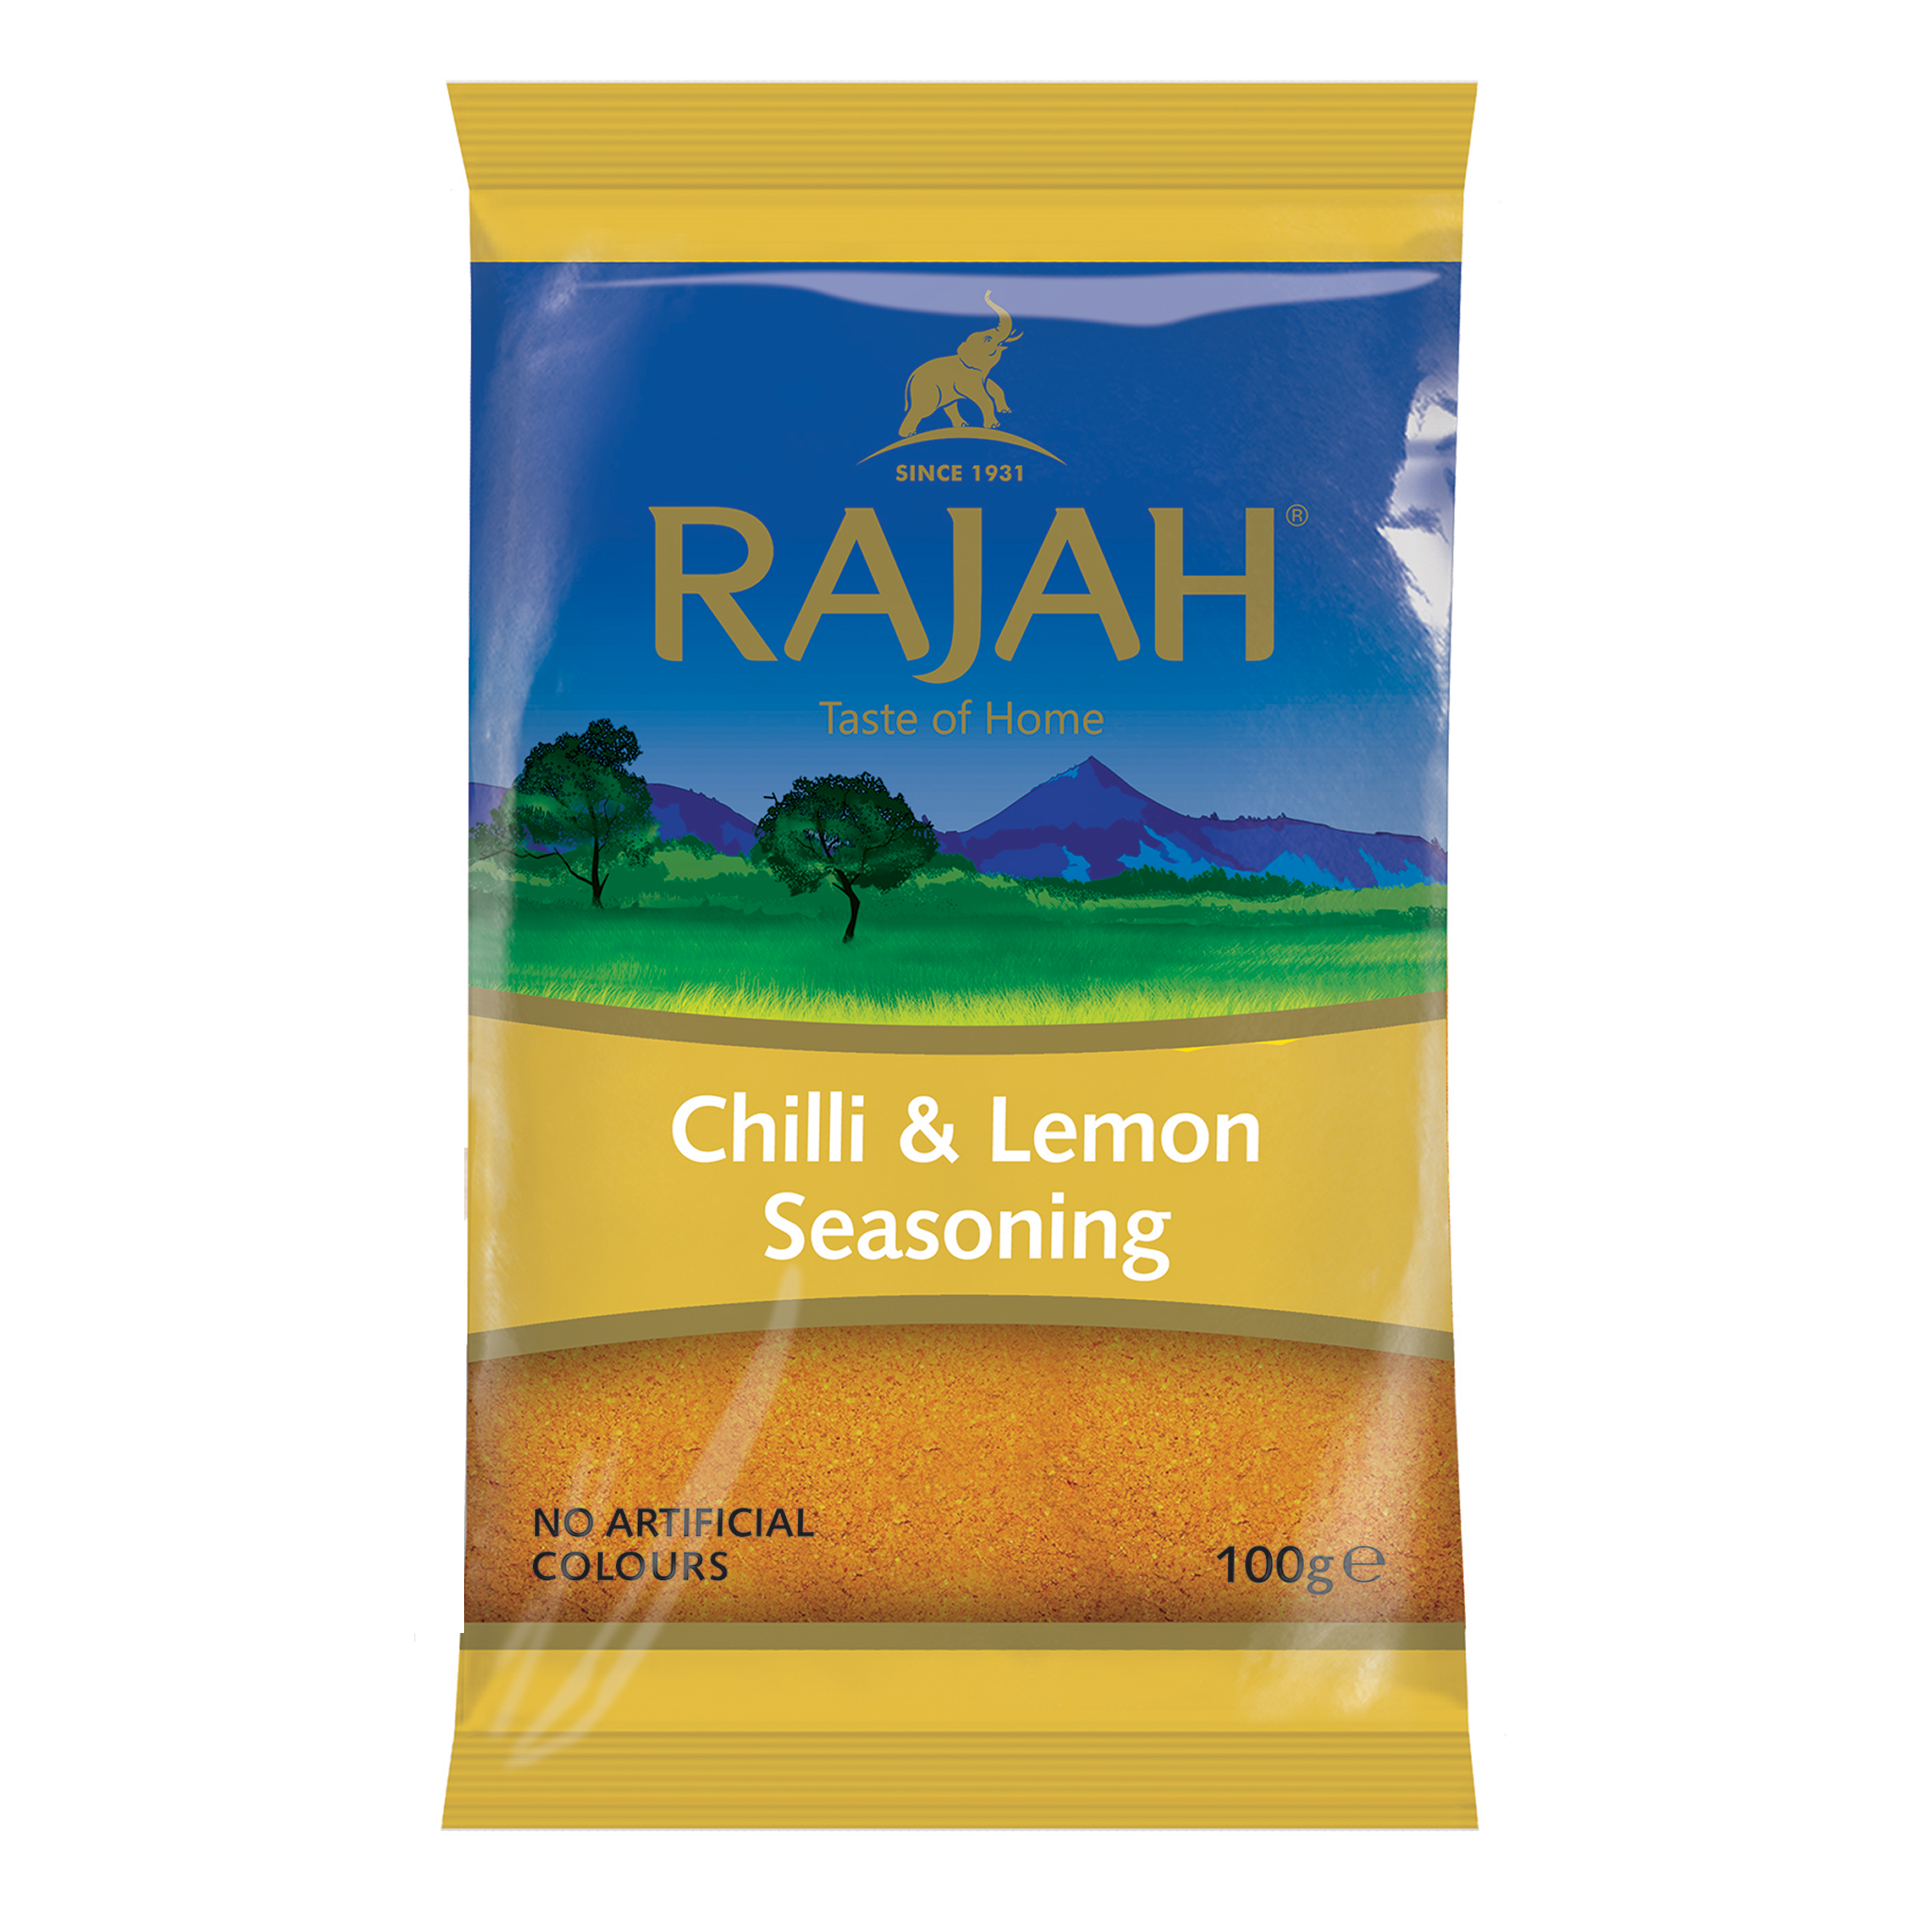 Chilli and Lemon Seasoning Spice Mix 100g by Rajah